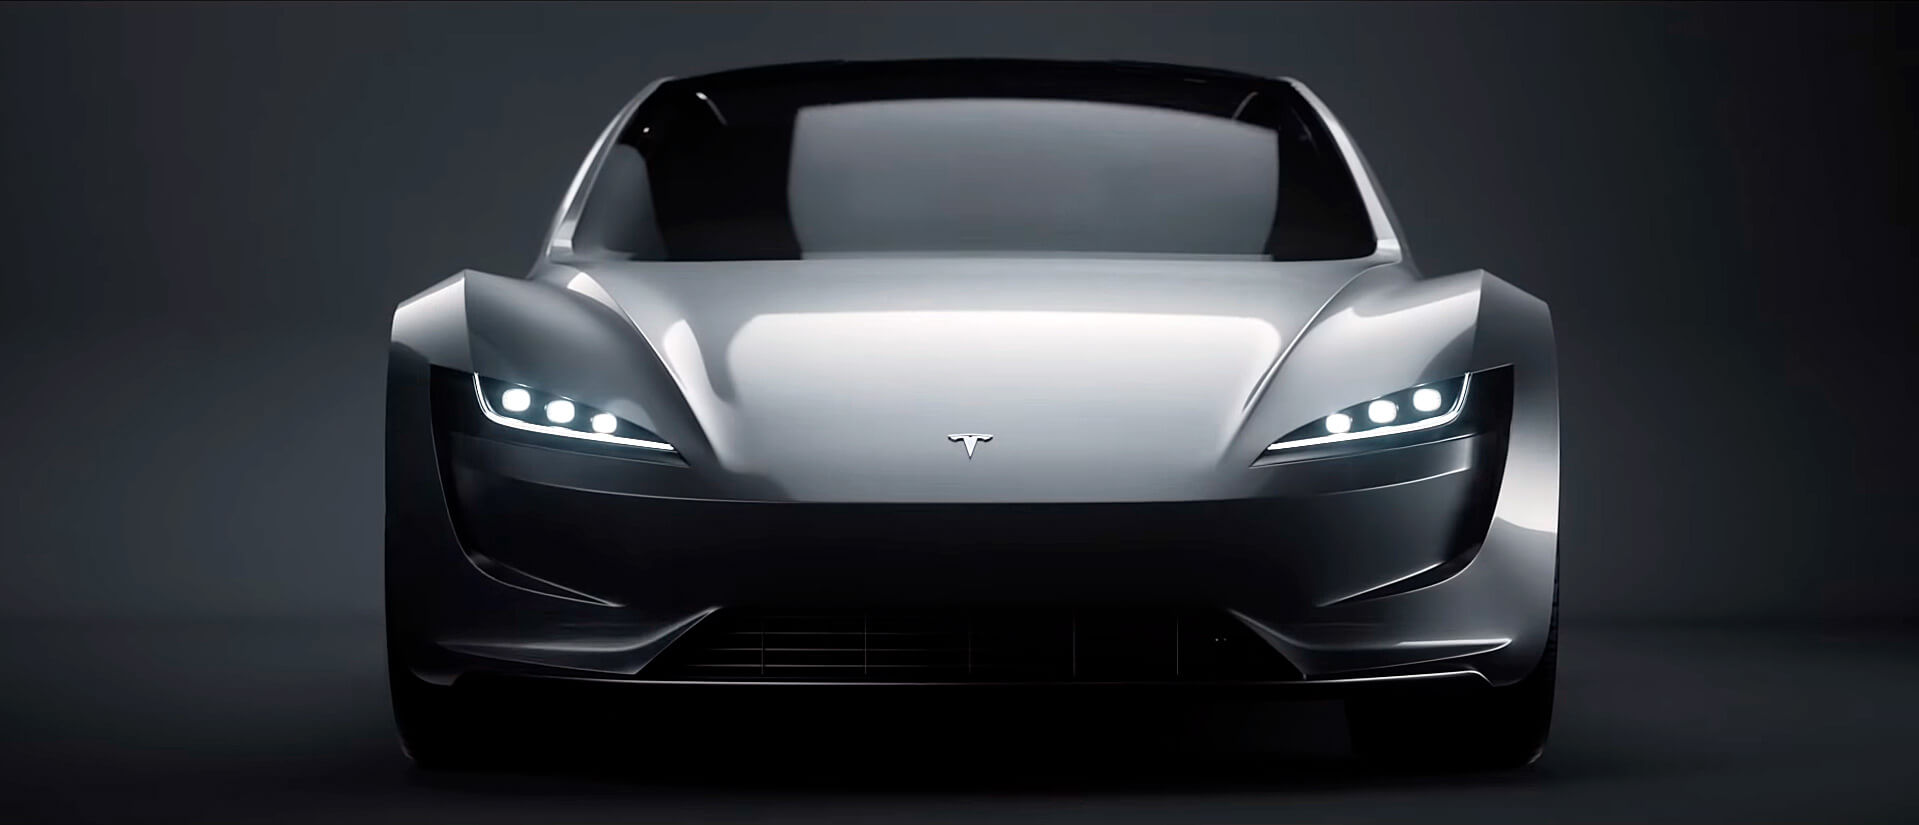 Tesla Roadster next-generation